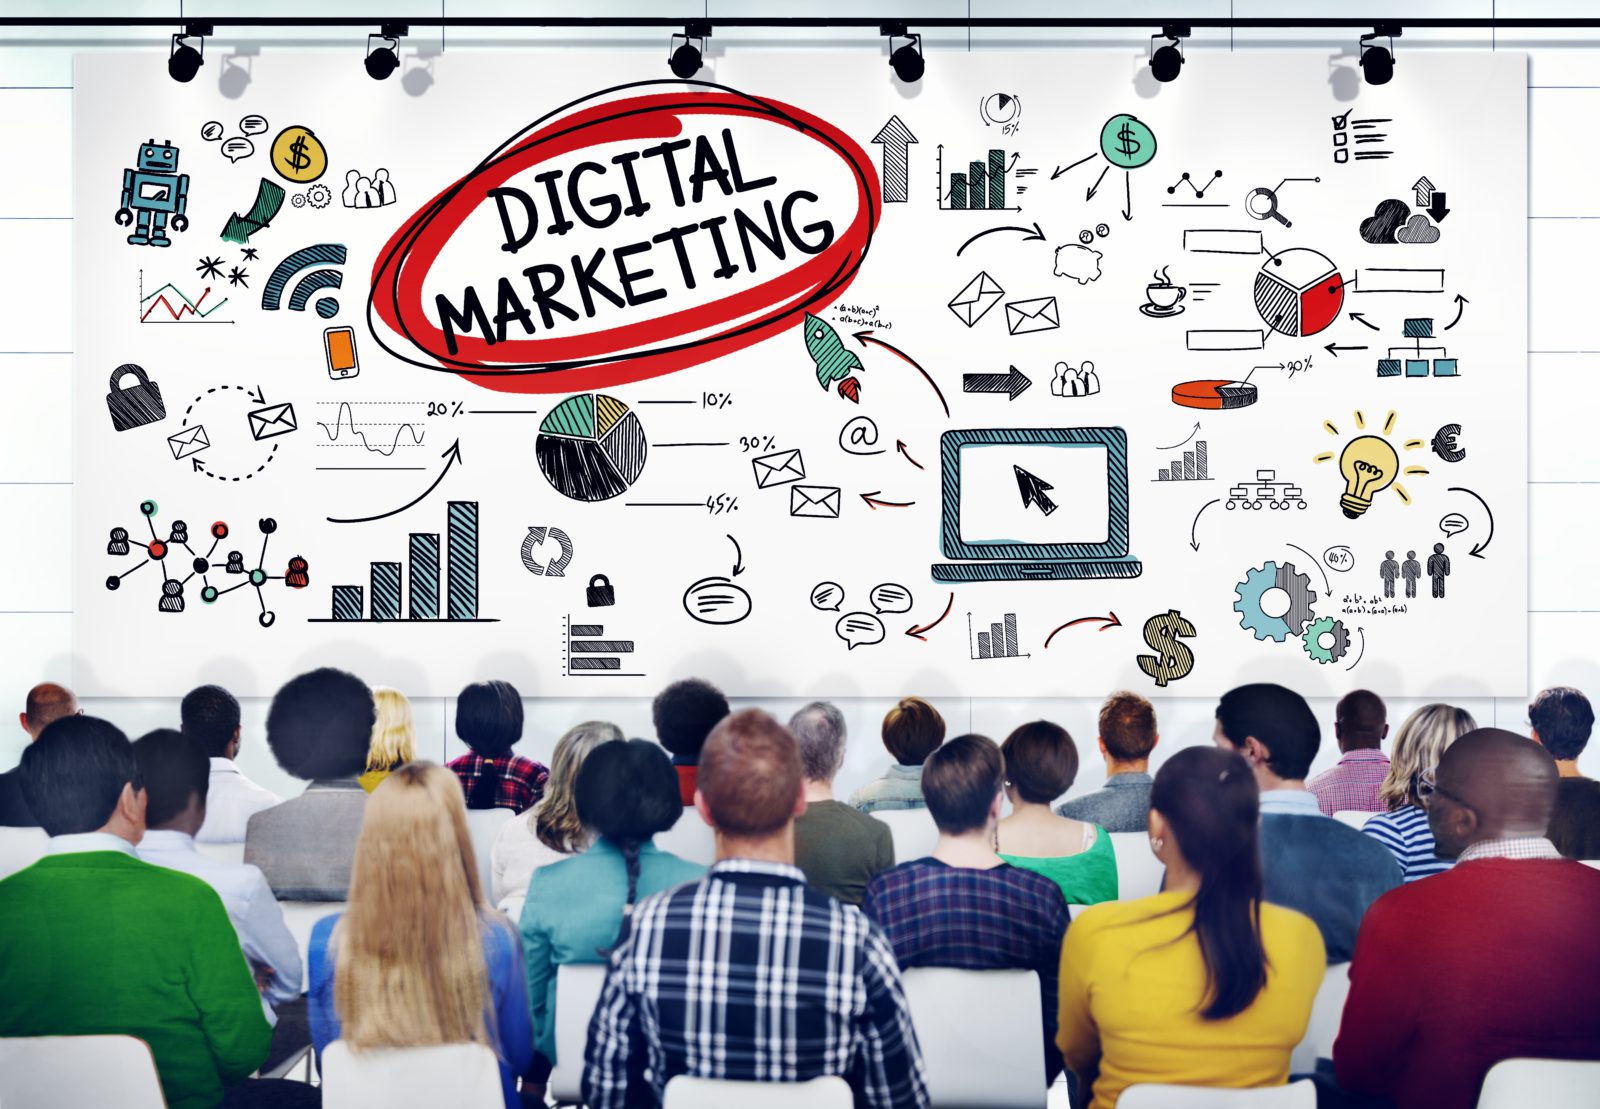 Digital Marketing Conference Stock Image